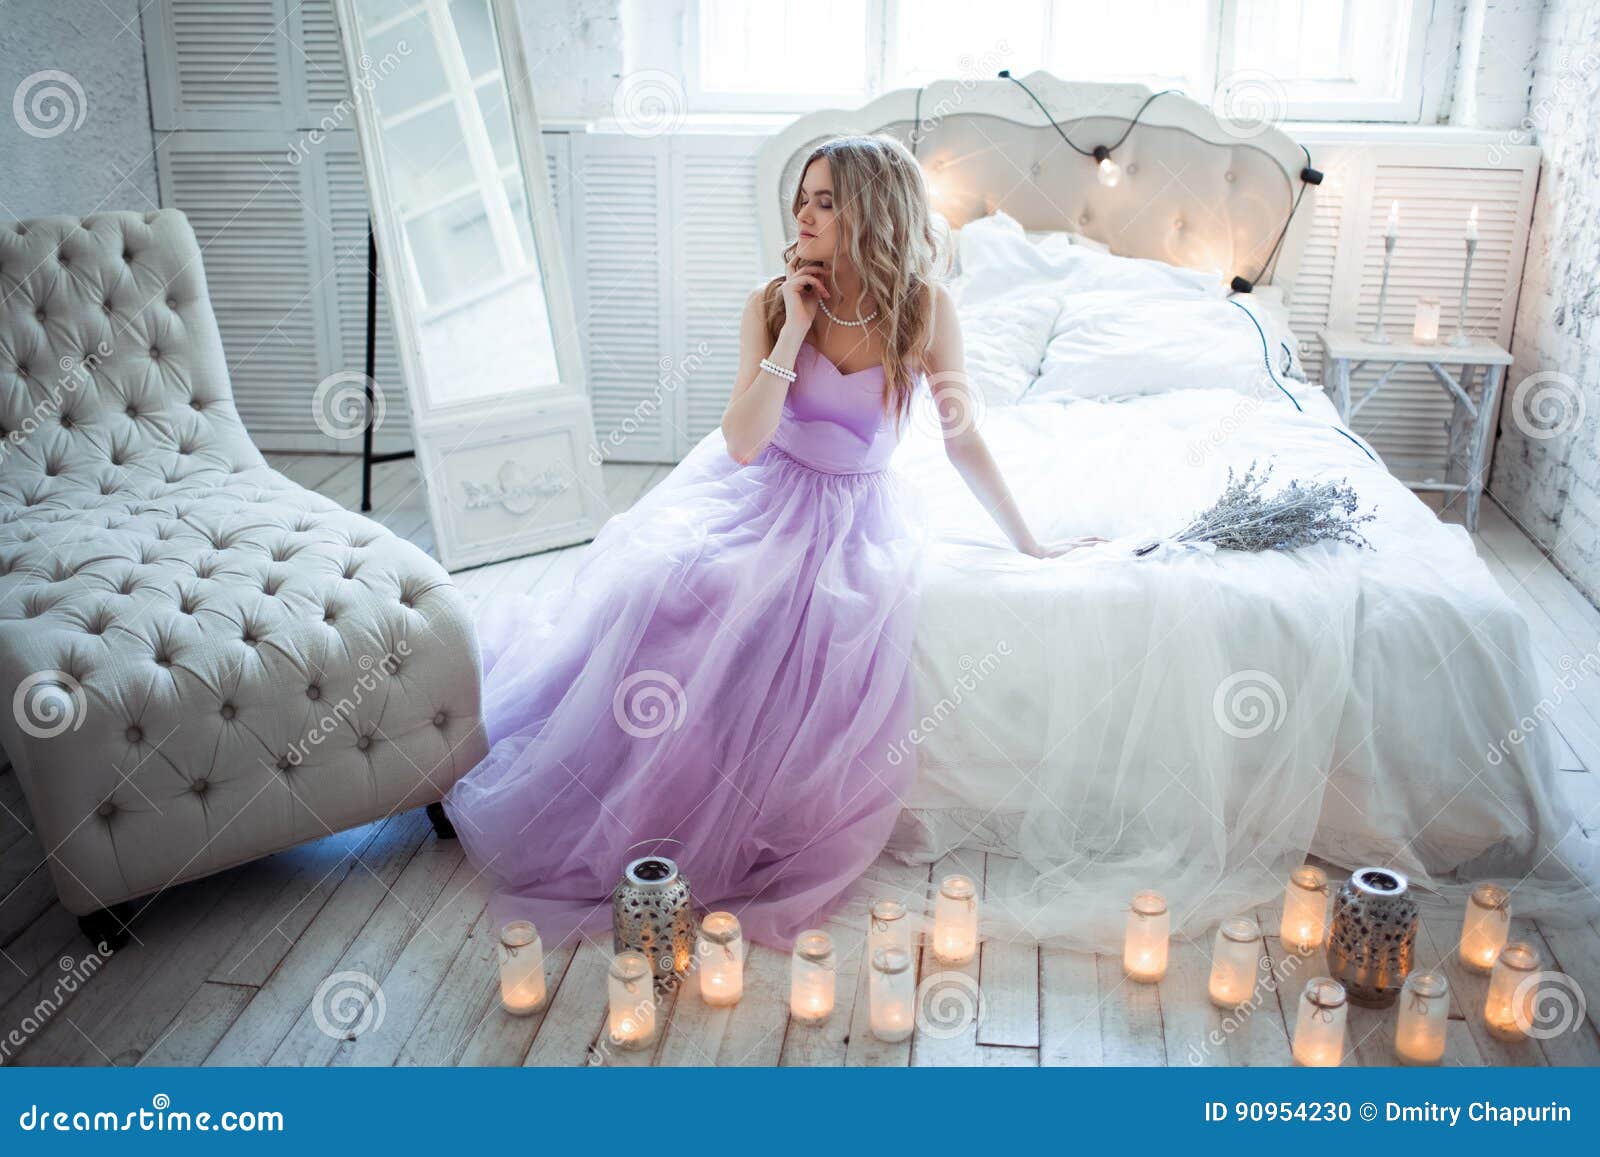 Very Beautiful Bride In A Delicate Purple Dress Sitting On